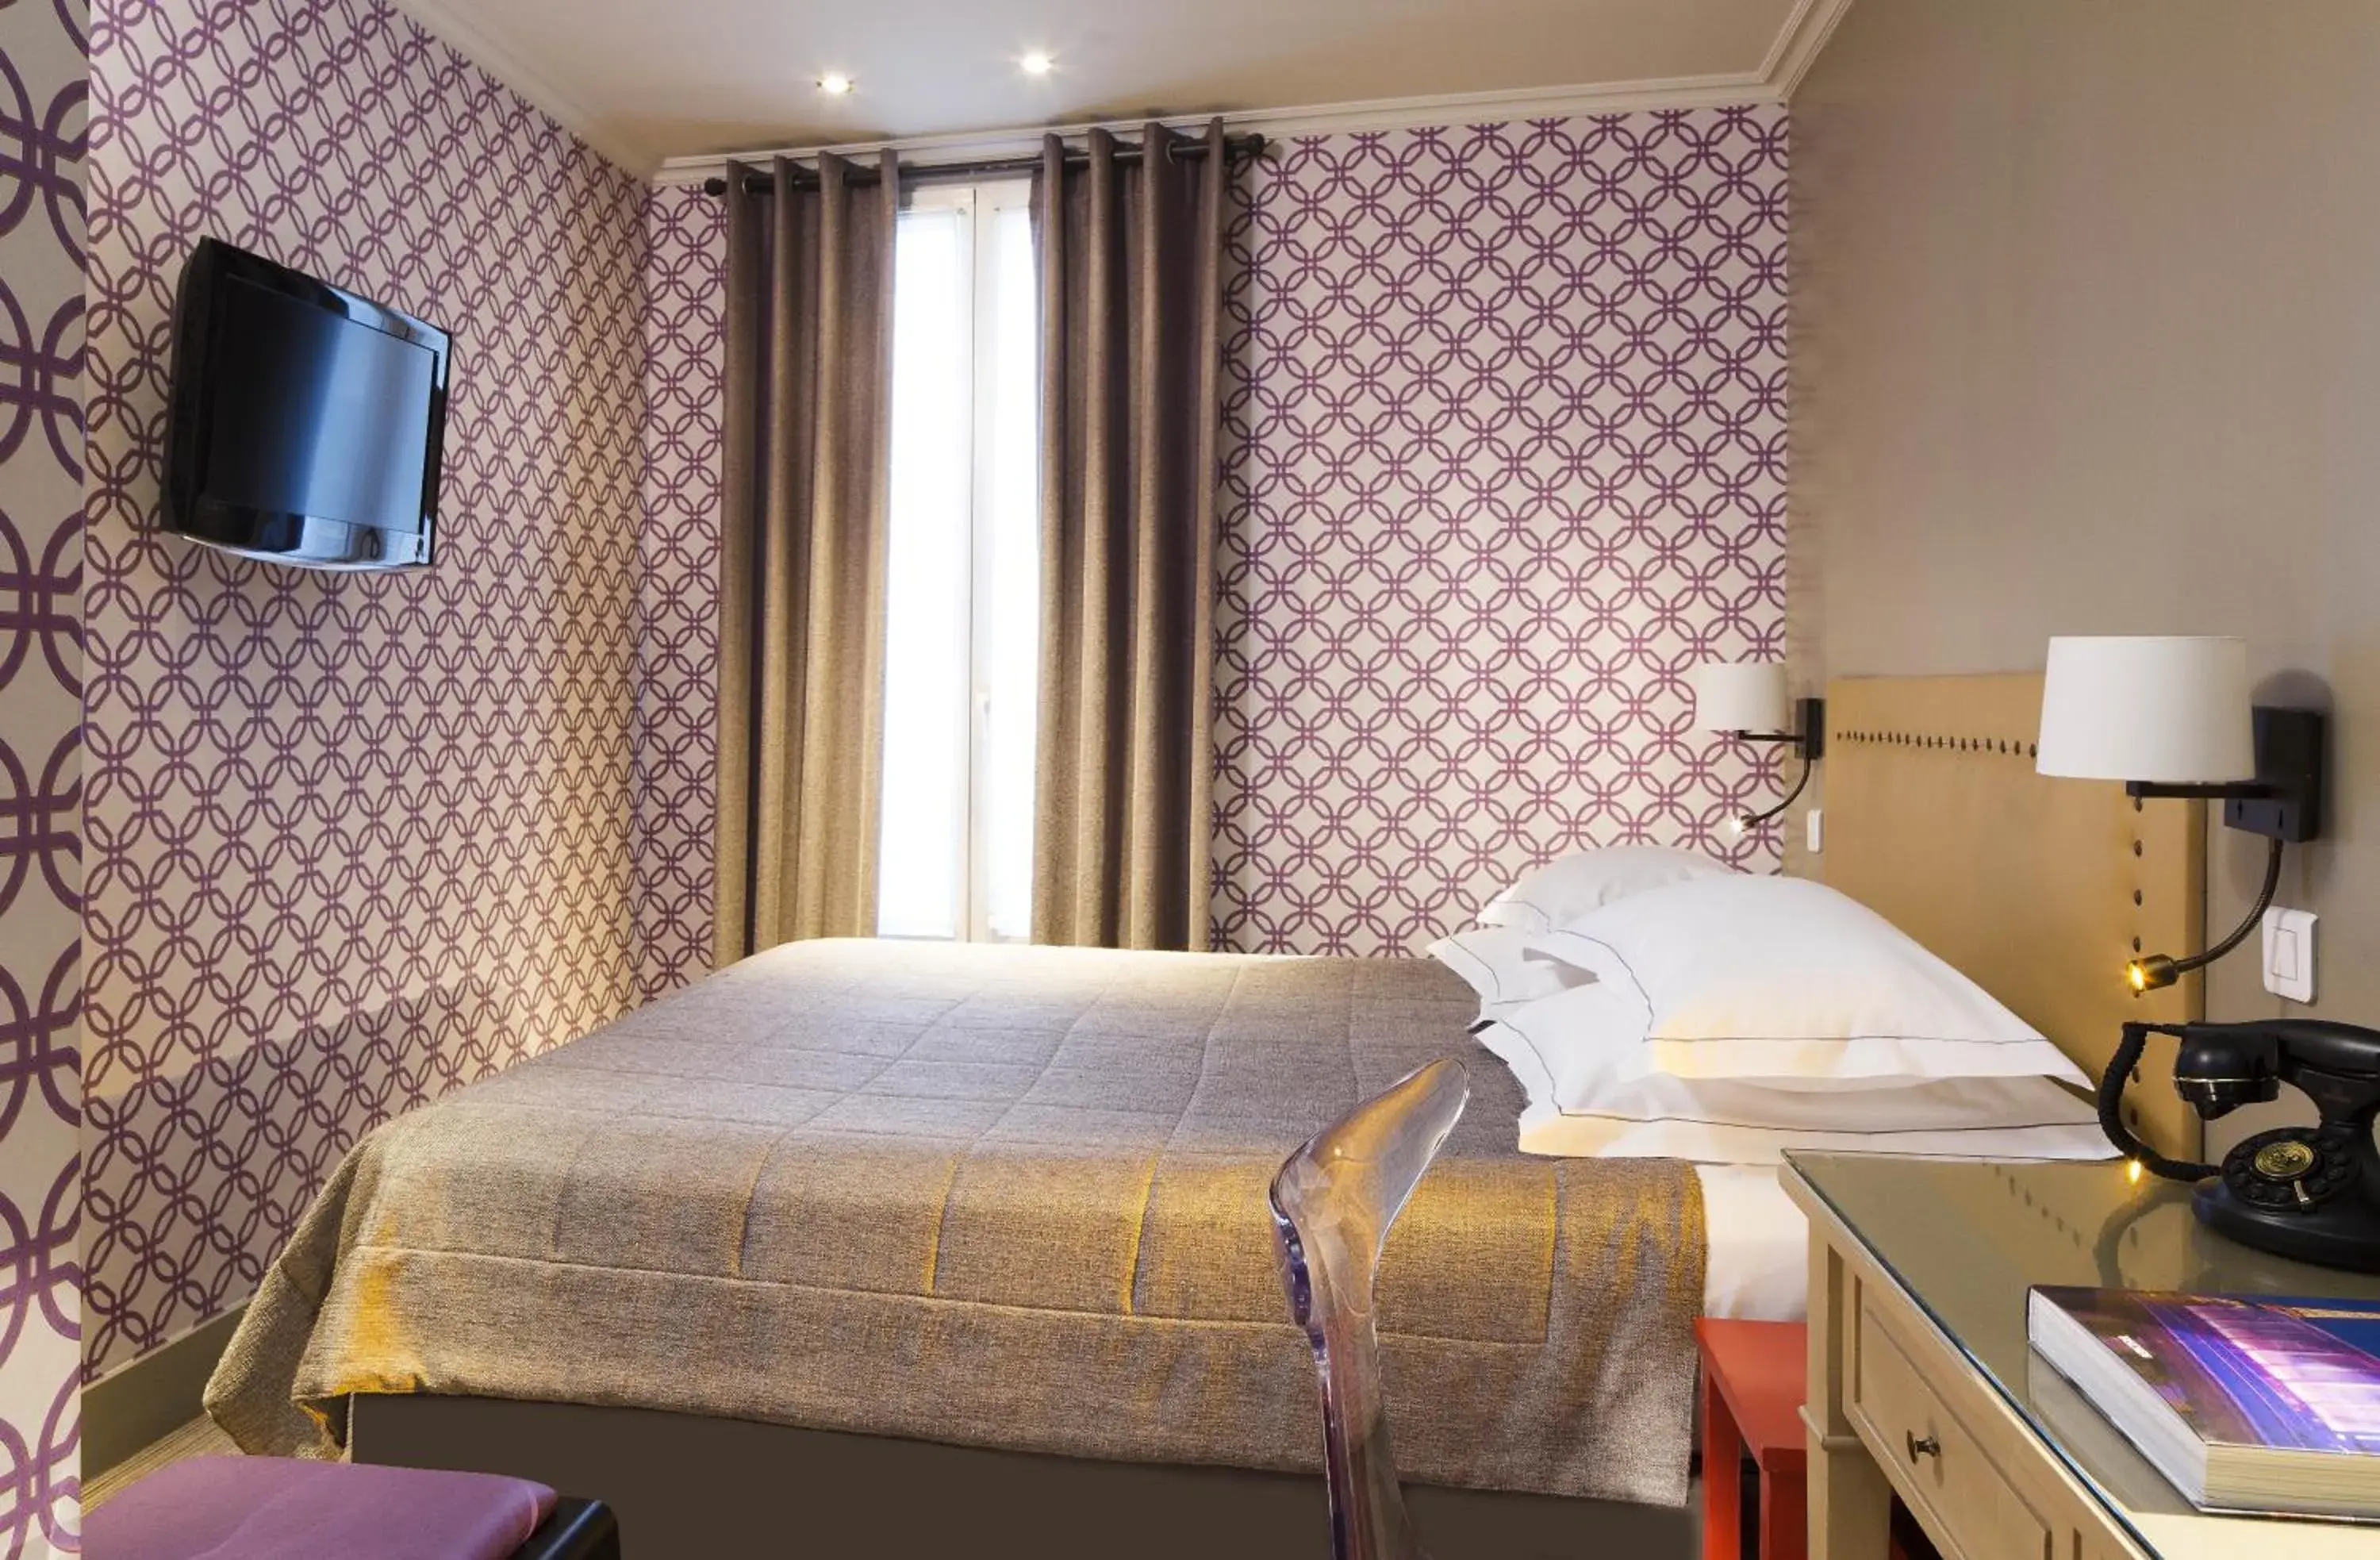 Bedroom, Room Photo in Apollon Montparnasse